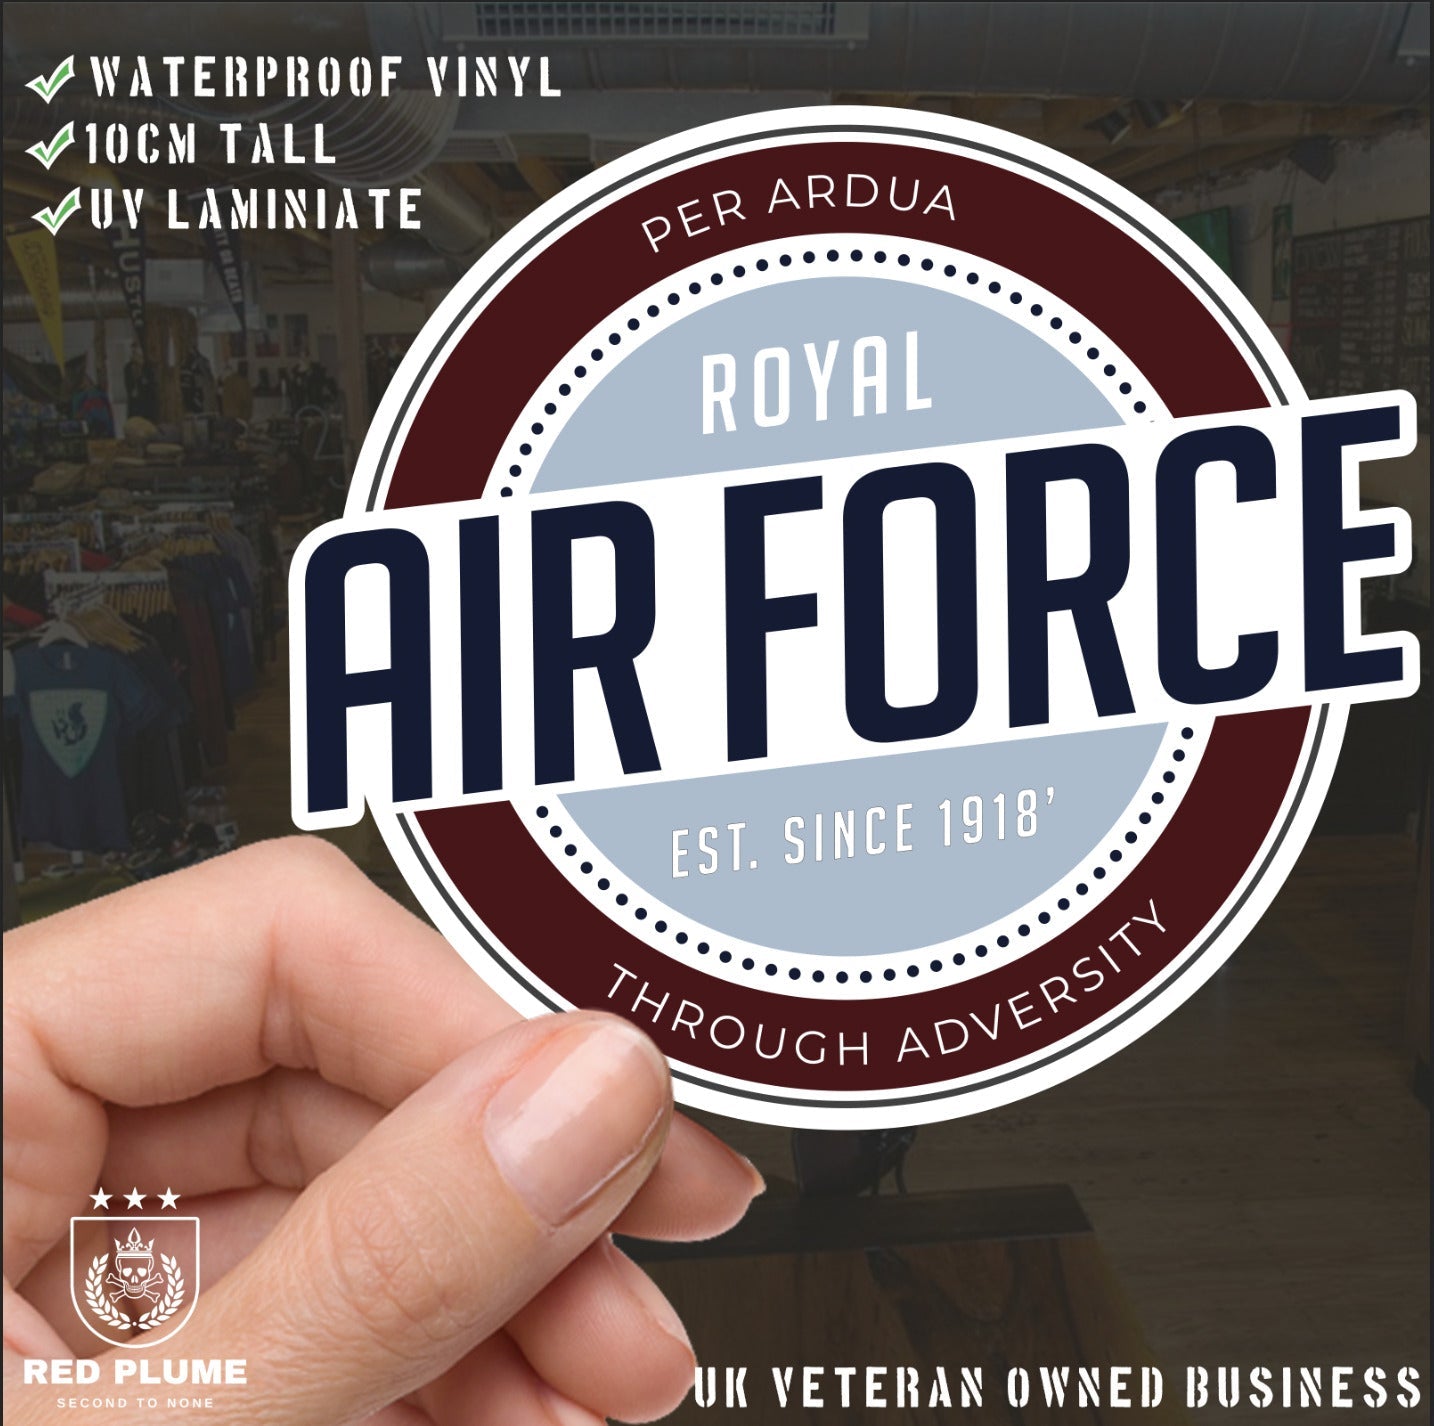 Waterproof Vinyl Decal - Royal Air Force | Retro | UV Laminated redplume